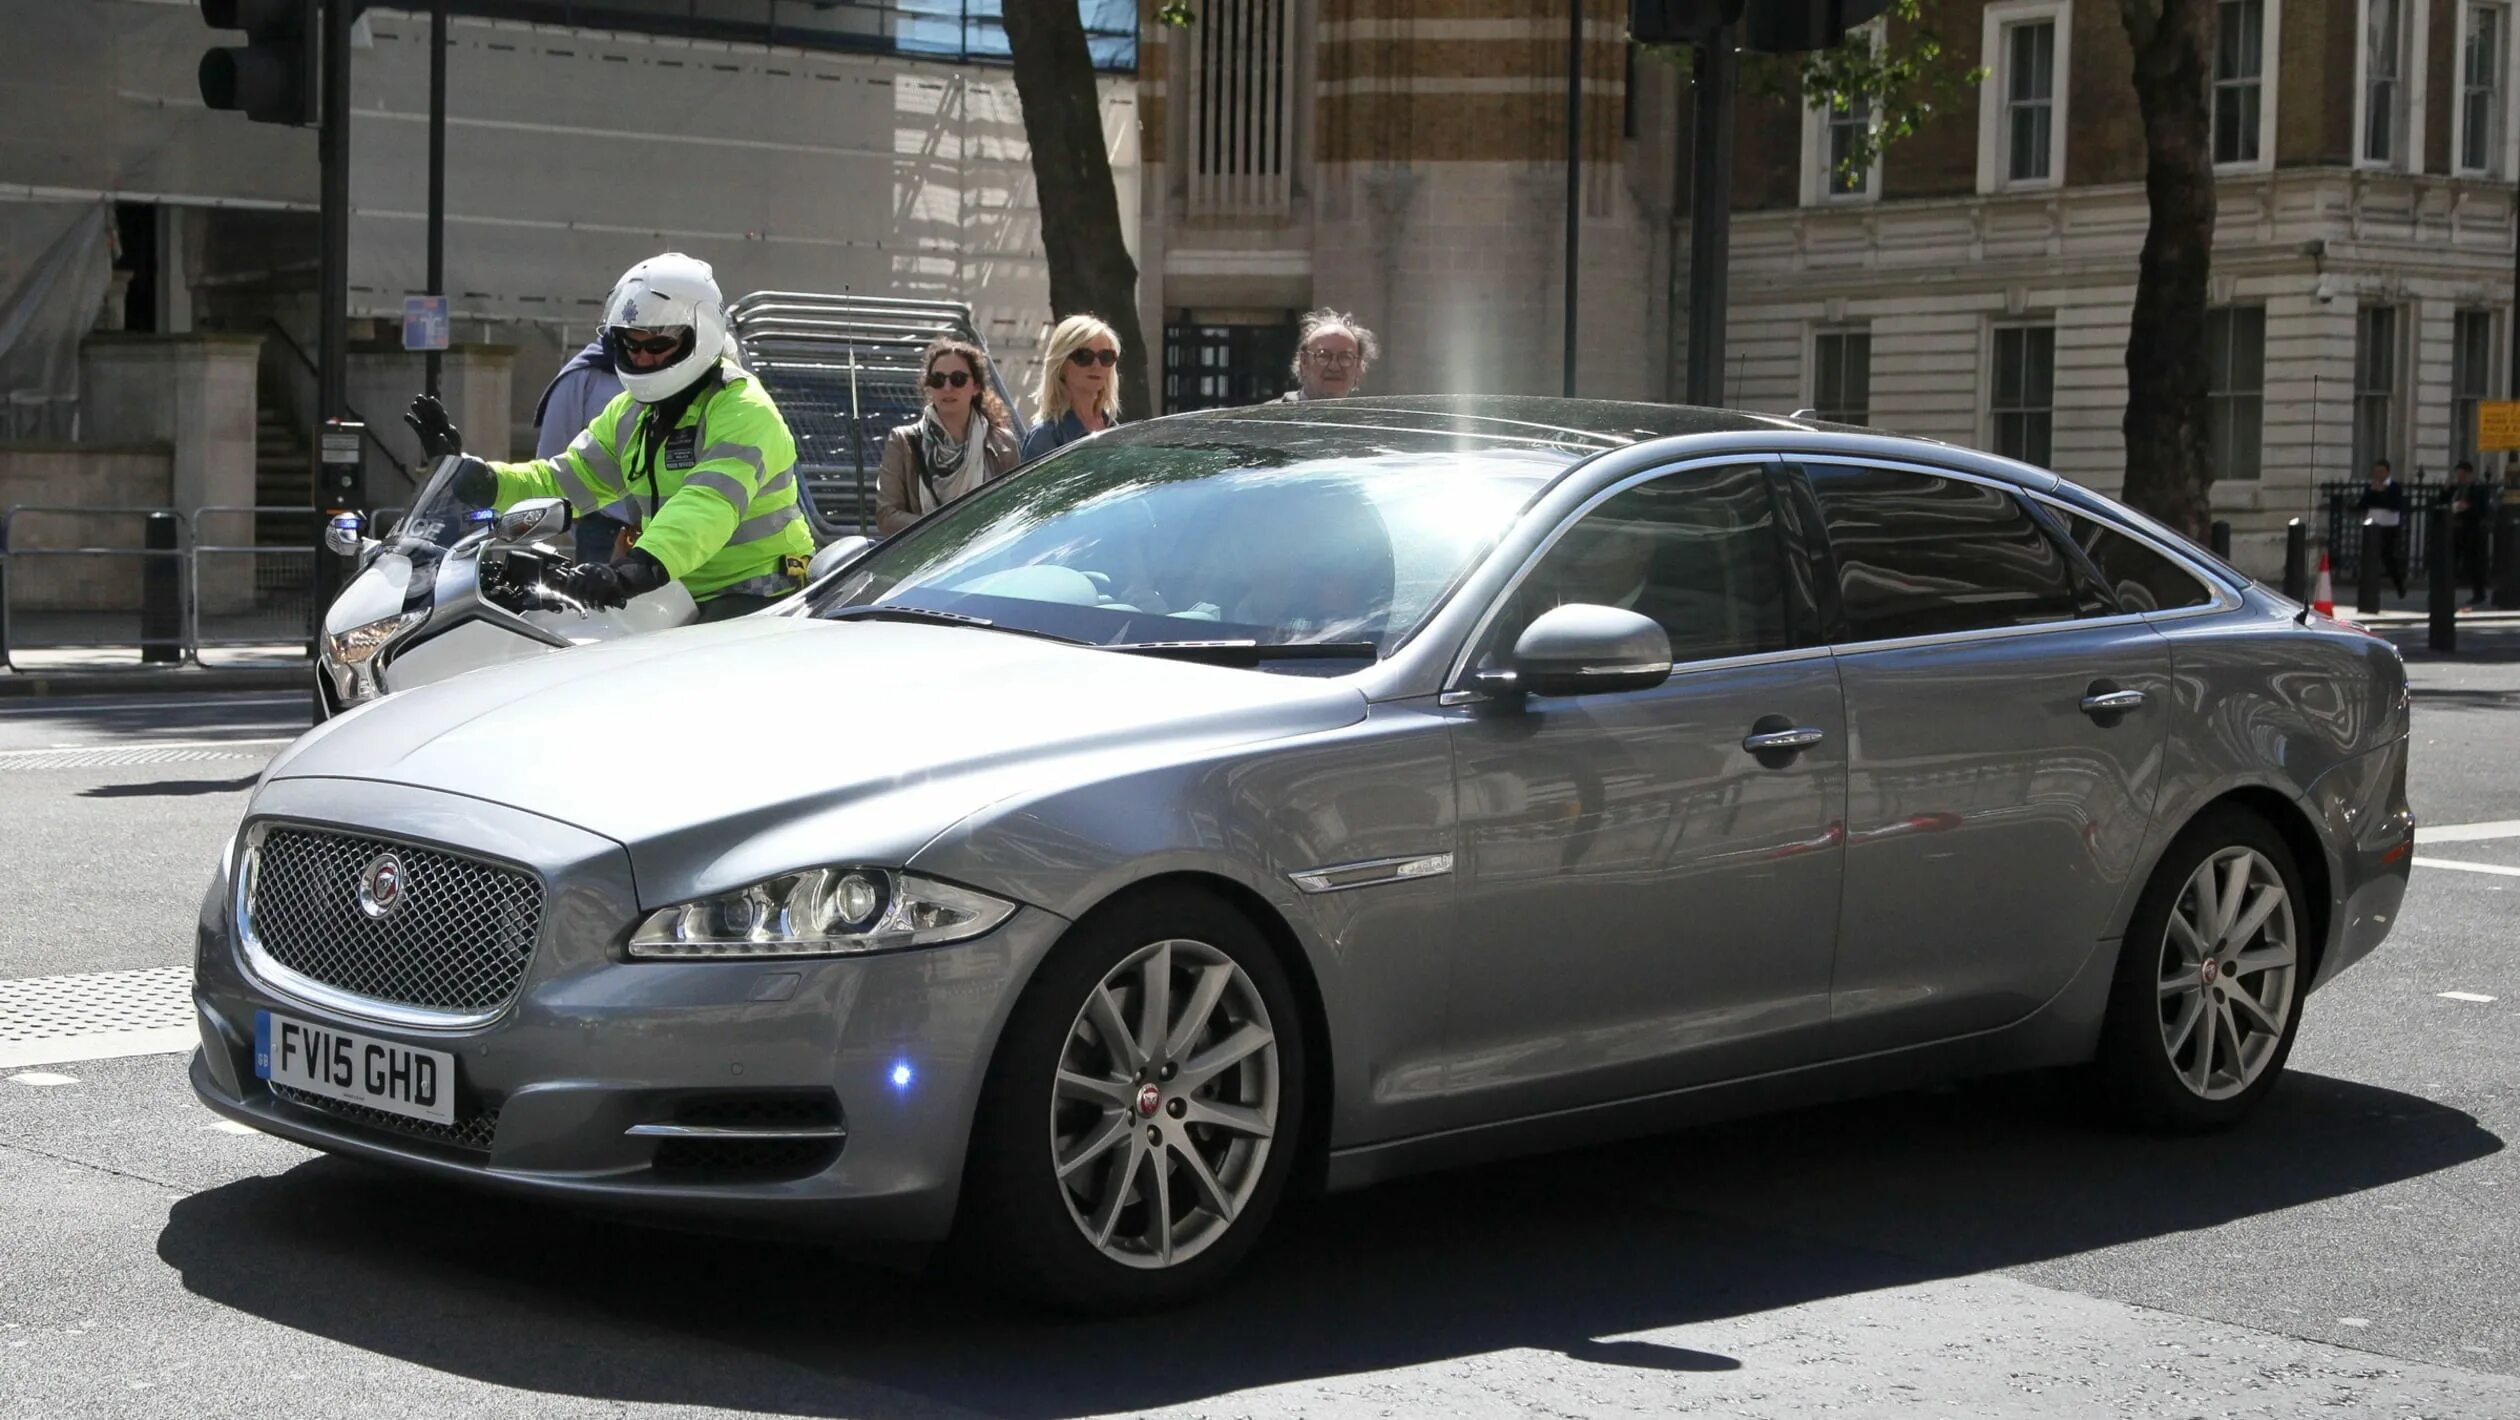 Ягуар премьер министра Великобритании. Jaguar XJ Sentinel. Автомобиль премьер министра Великобритании. Премьер министр машина. Uk prime